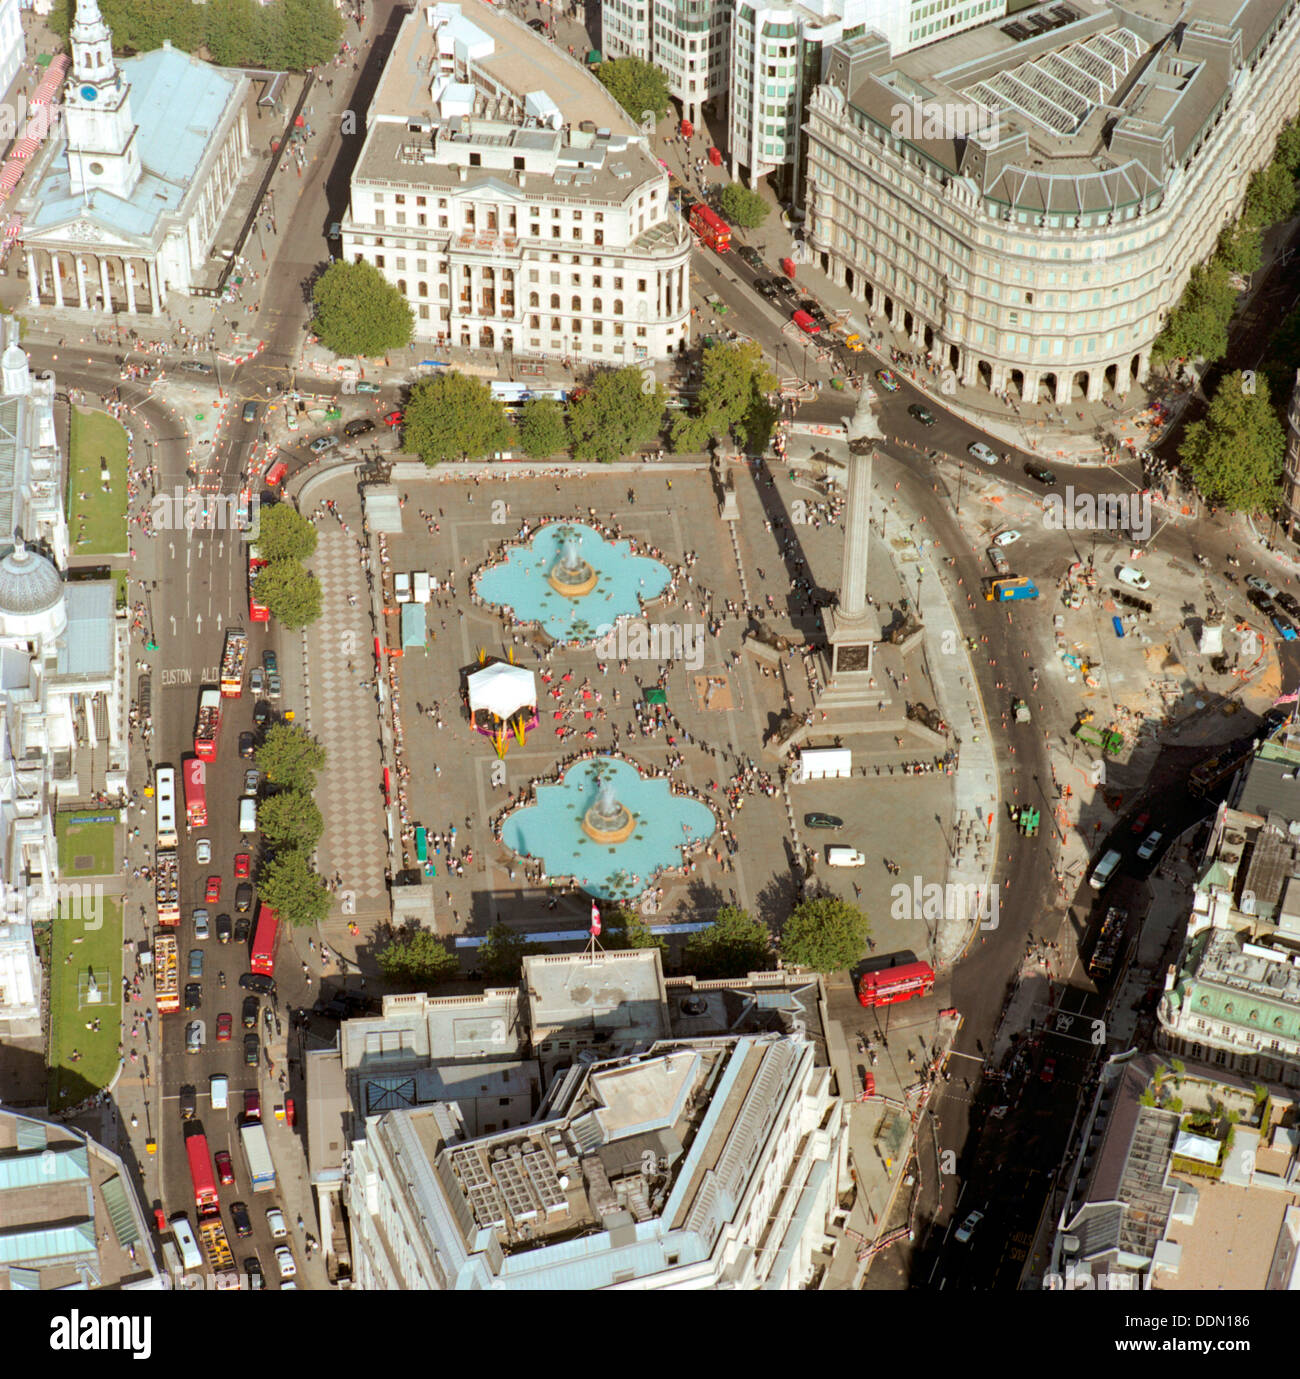 Trafalgar Square, Westminster, London, 2002. Artist: EH/RCHME staff photographer Stock Photo